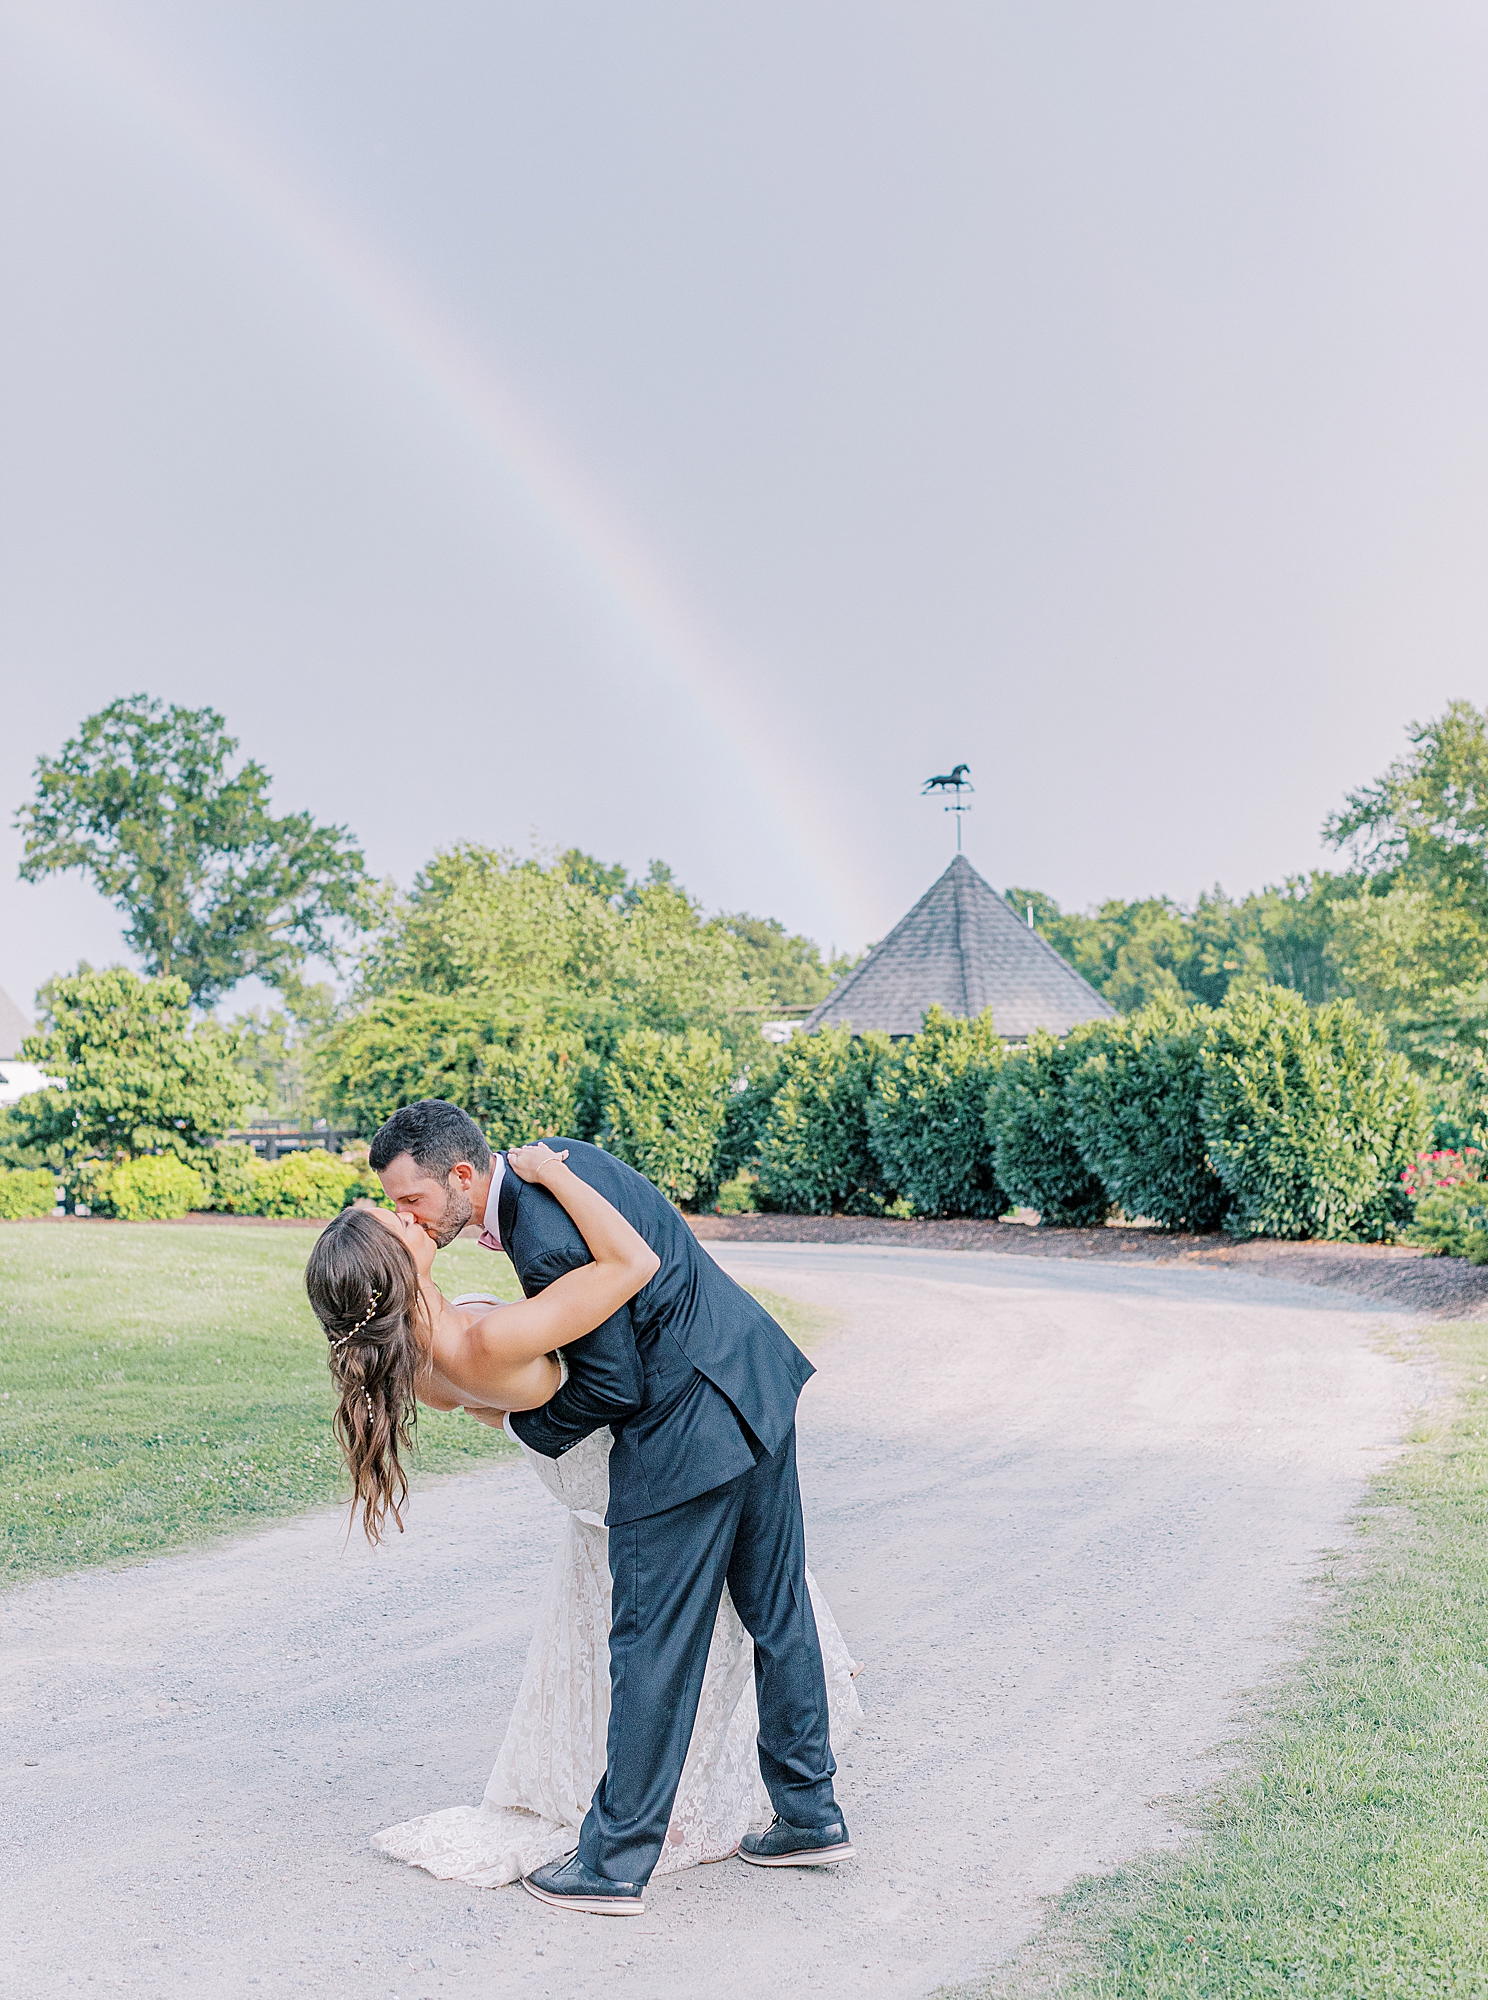 Rainbow behind bride and groom. Bride and groom kiss under rainbow.